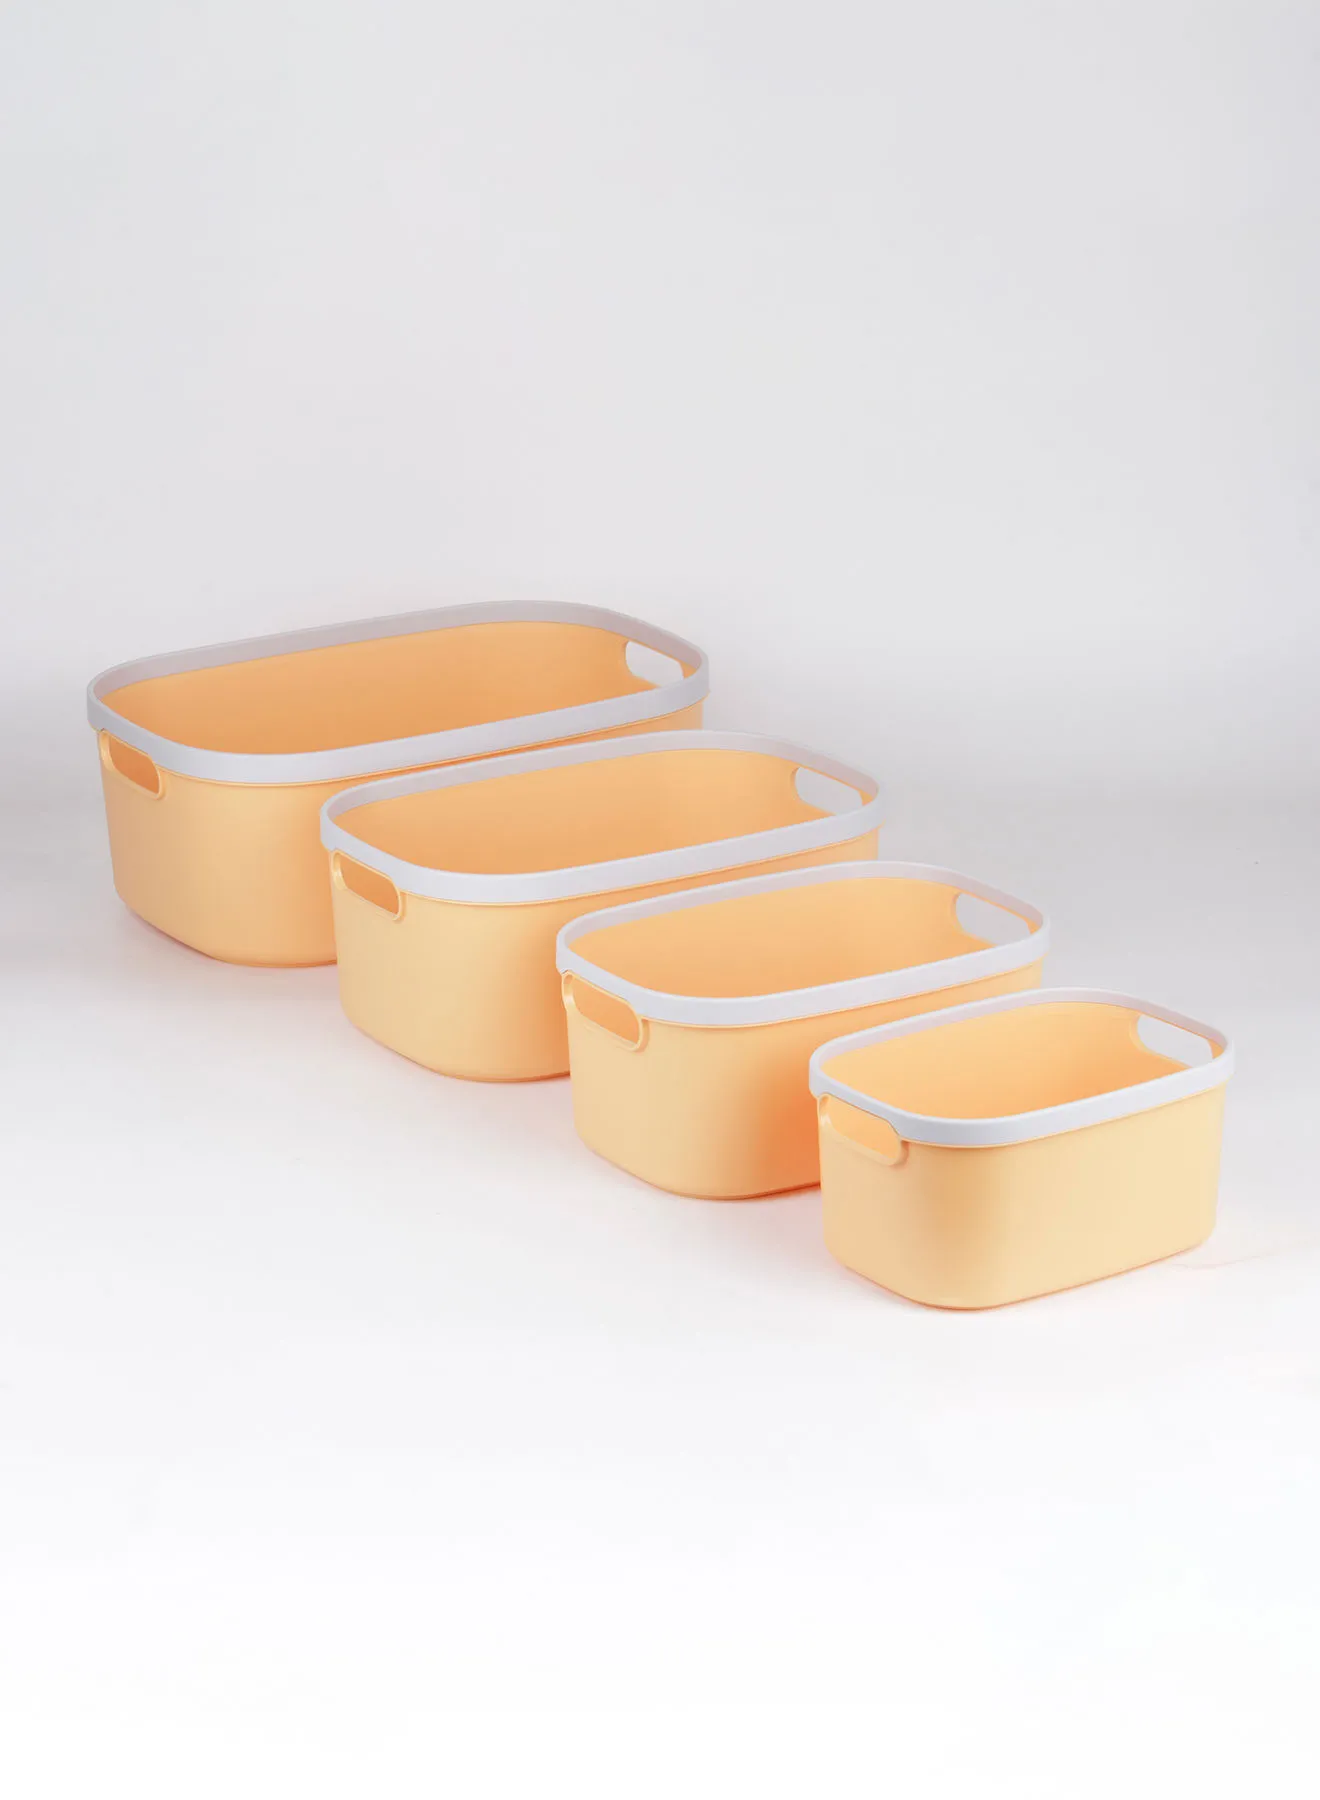 Amal 4-Piece Storage Basket 2-Tones Set Convenient to use Daily Simple Storage Hygienic and Organized TG51462S4 Yellow/White 17 x 44 x 30cm